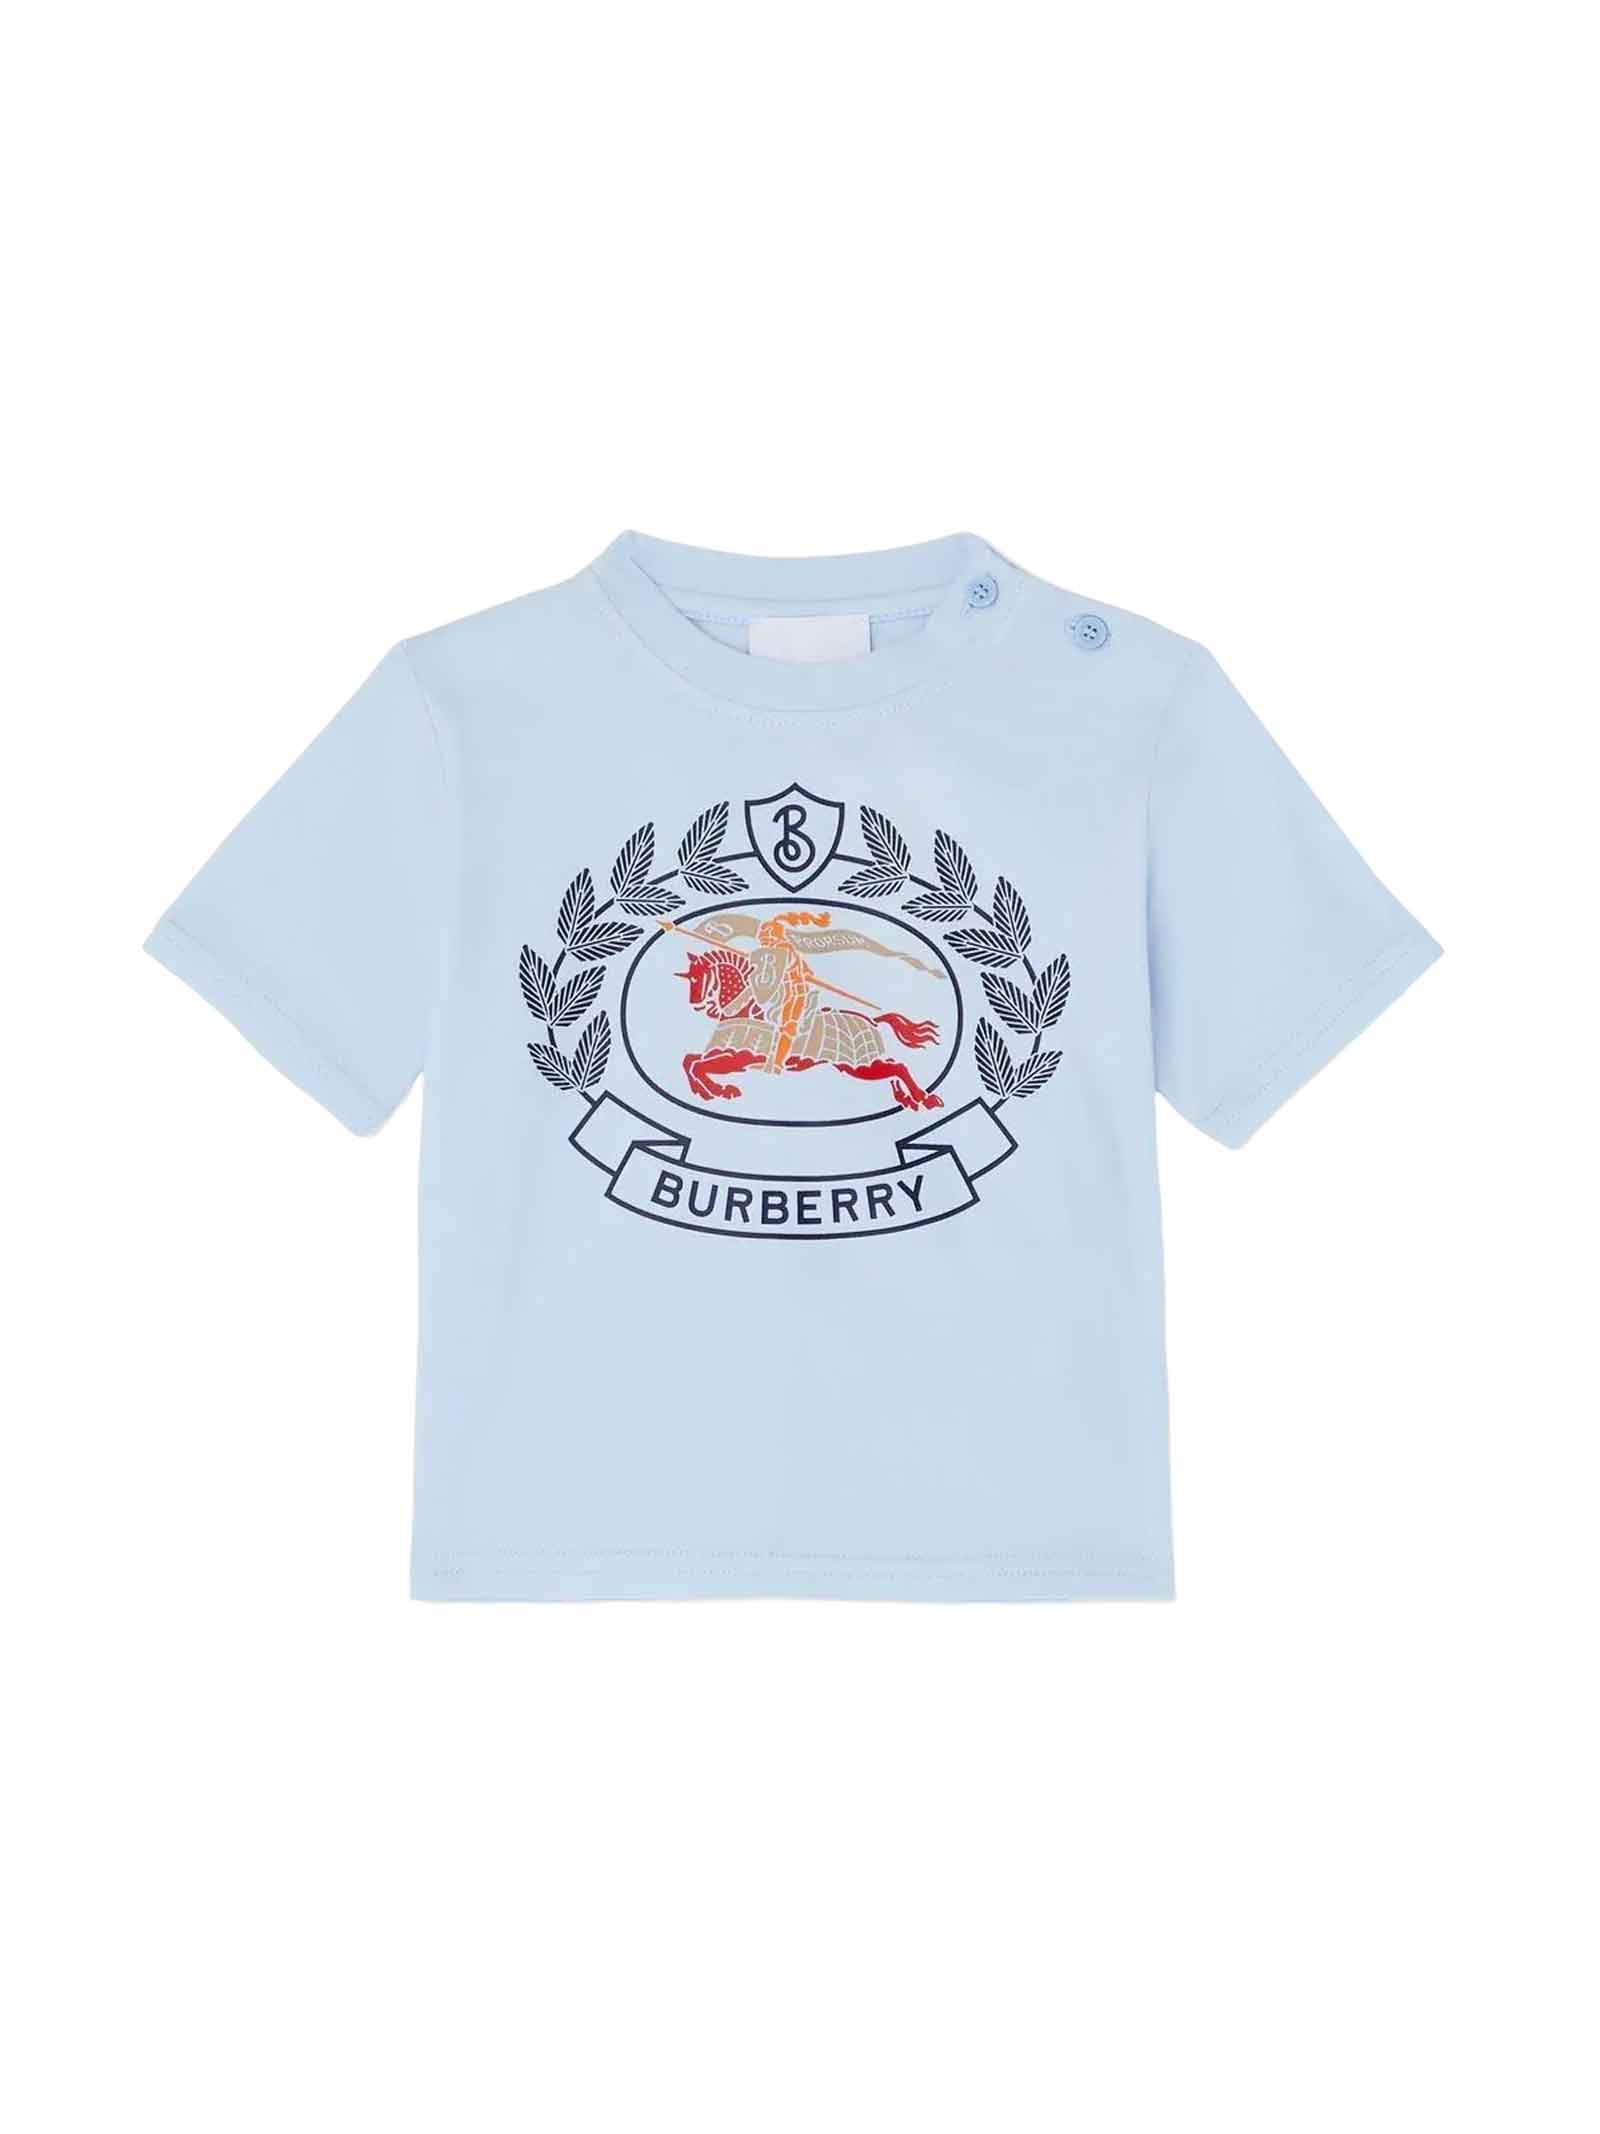 Shop Burberry Blue T-shirt Baby Boy